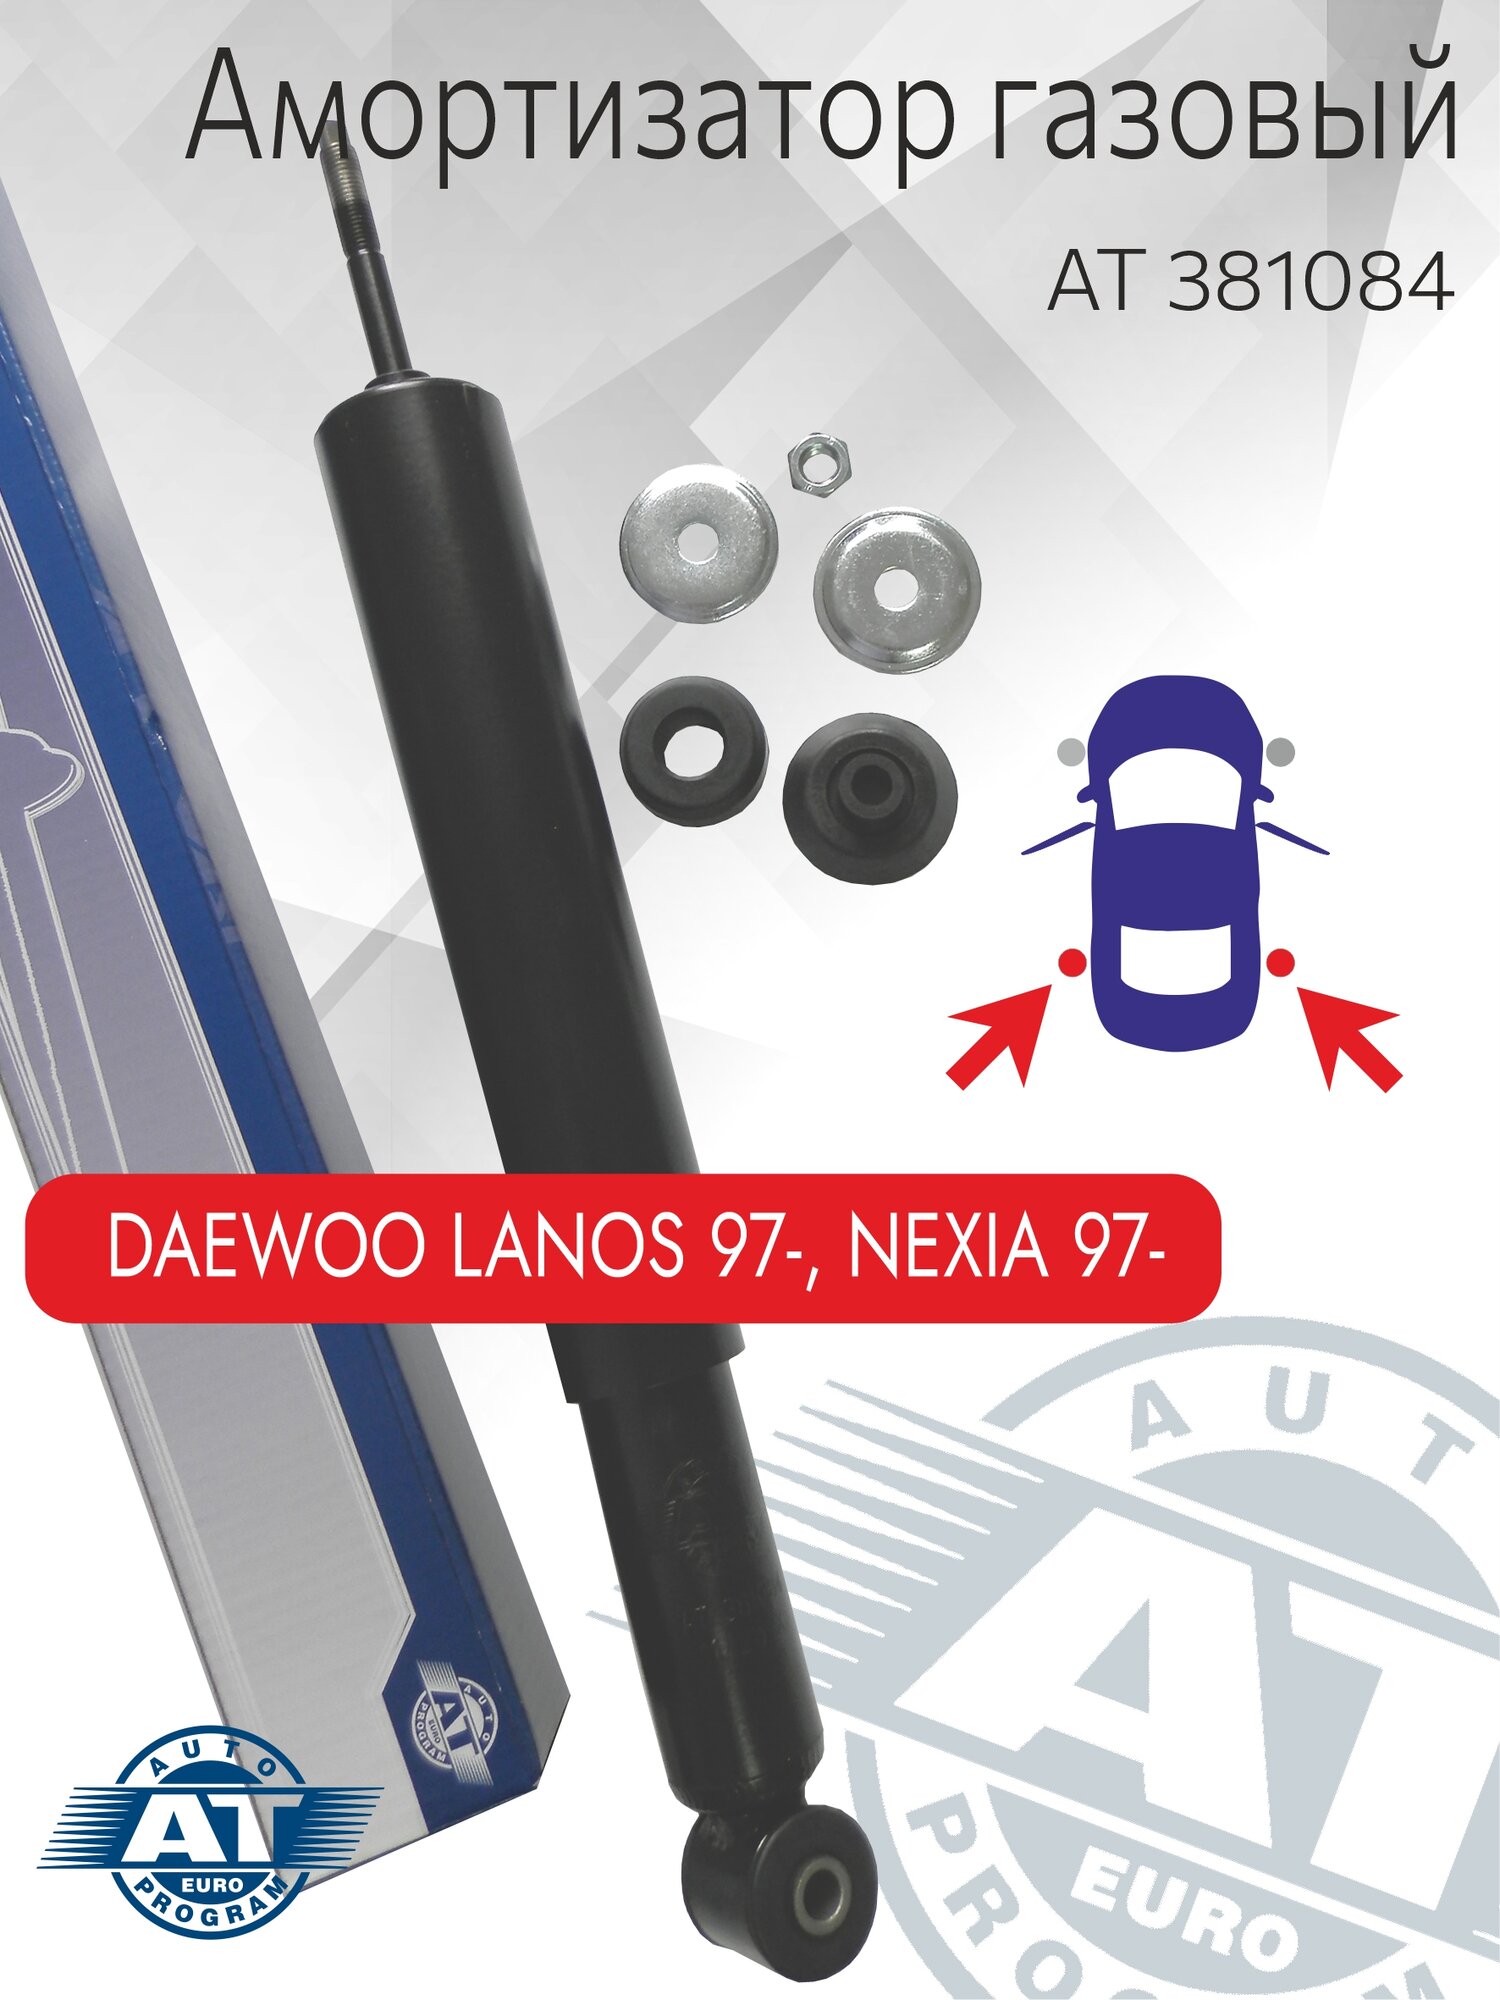 Амортизатор масляный, AT 381084, Daewoo Lanos, Nexia; Opel Kadett, задний(лев; пра)